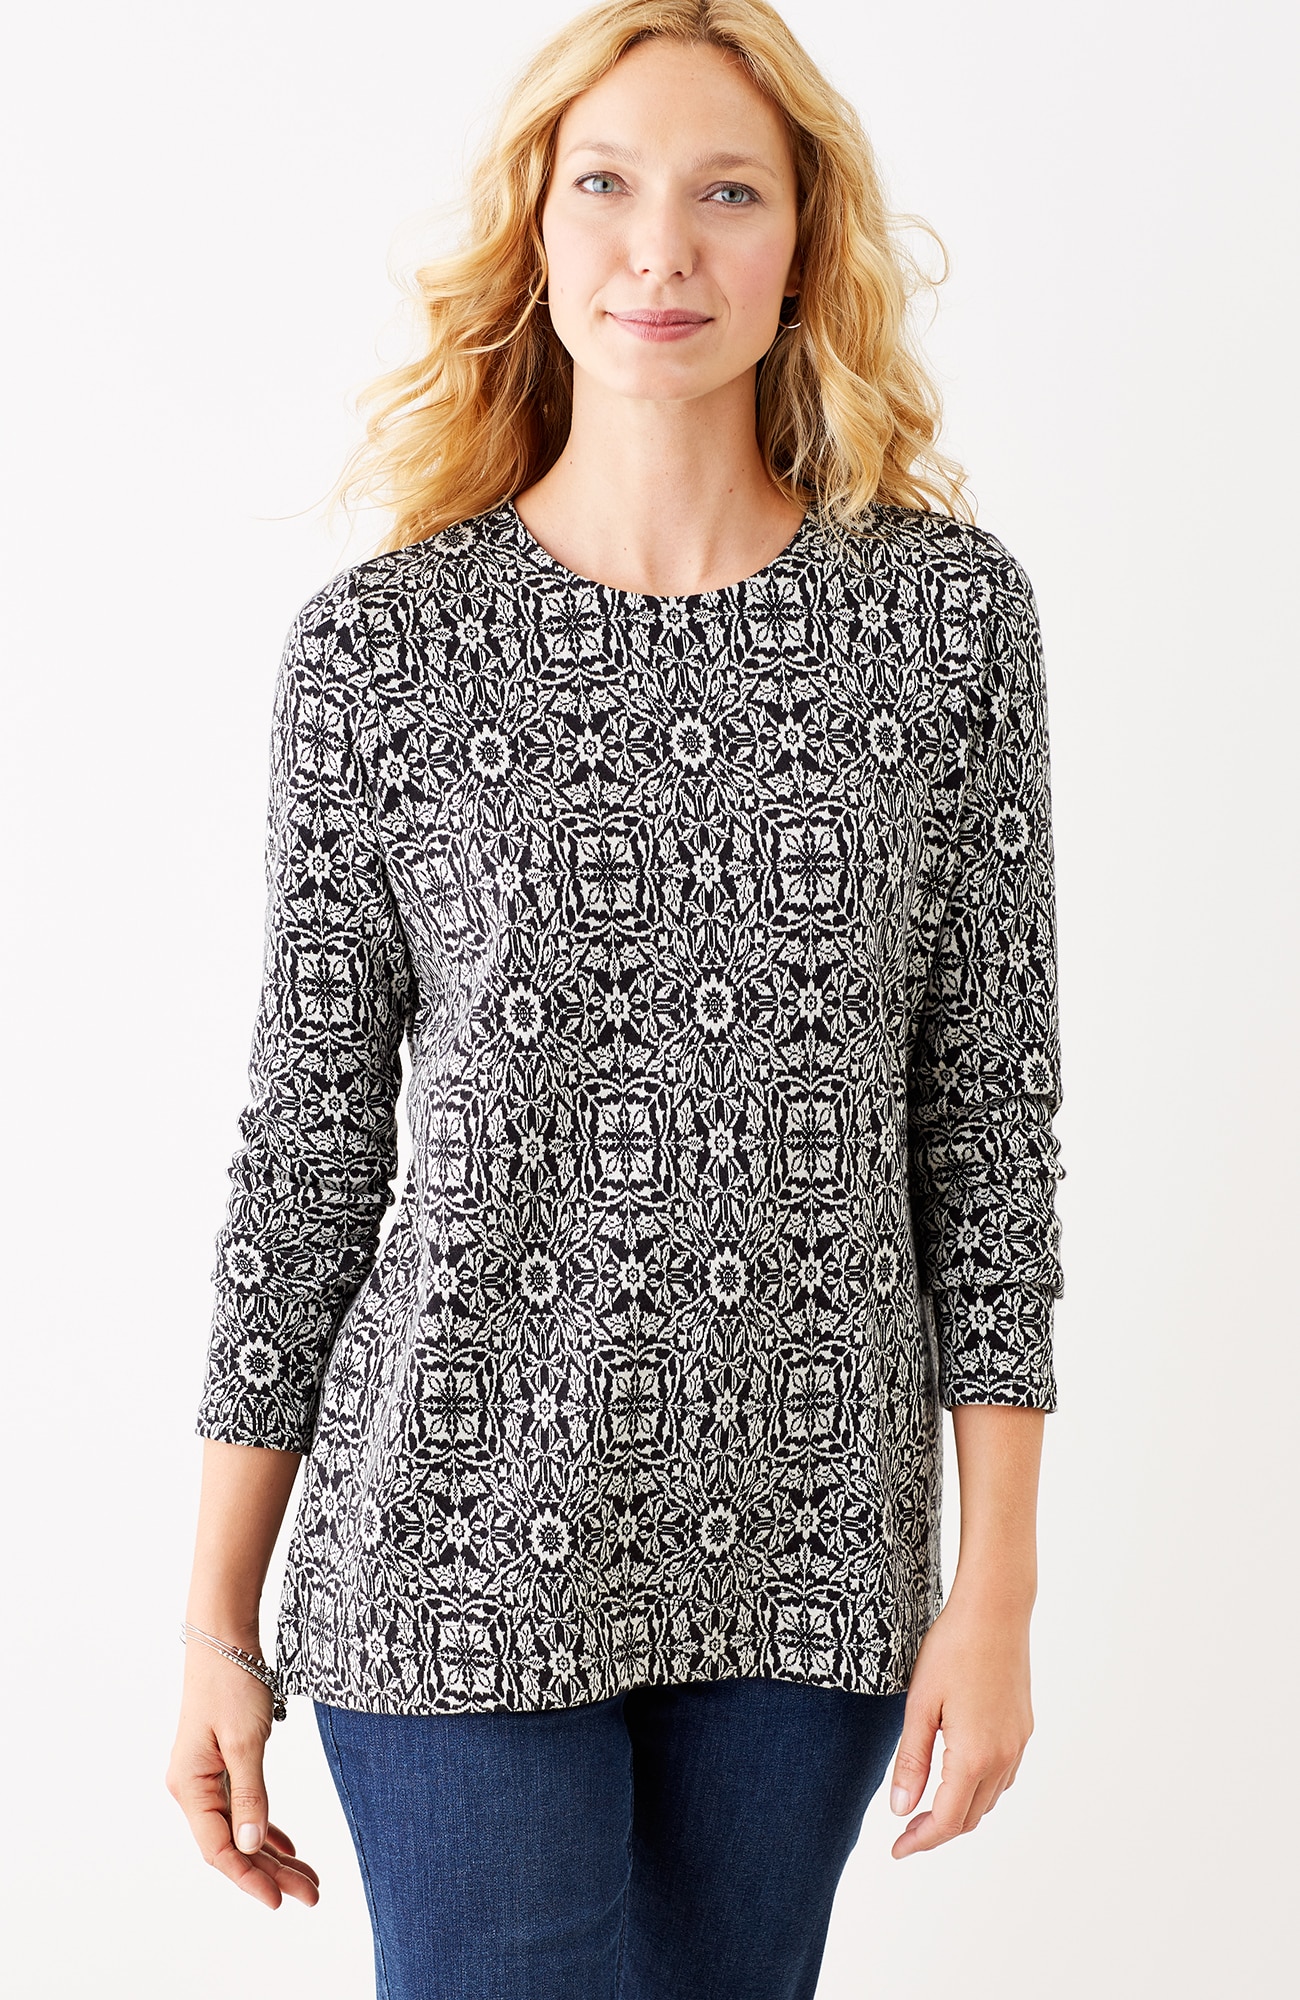 Women's Plus Size Knit Tops & T Shirts | J.Jill